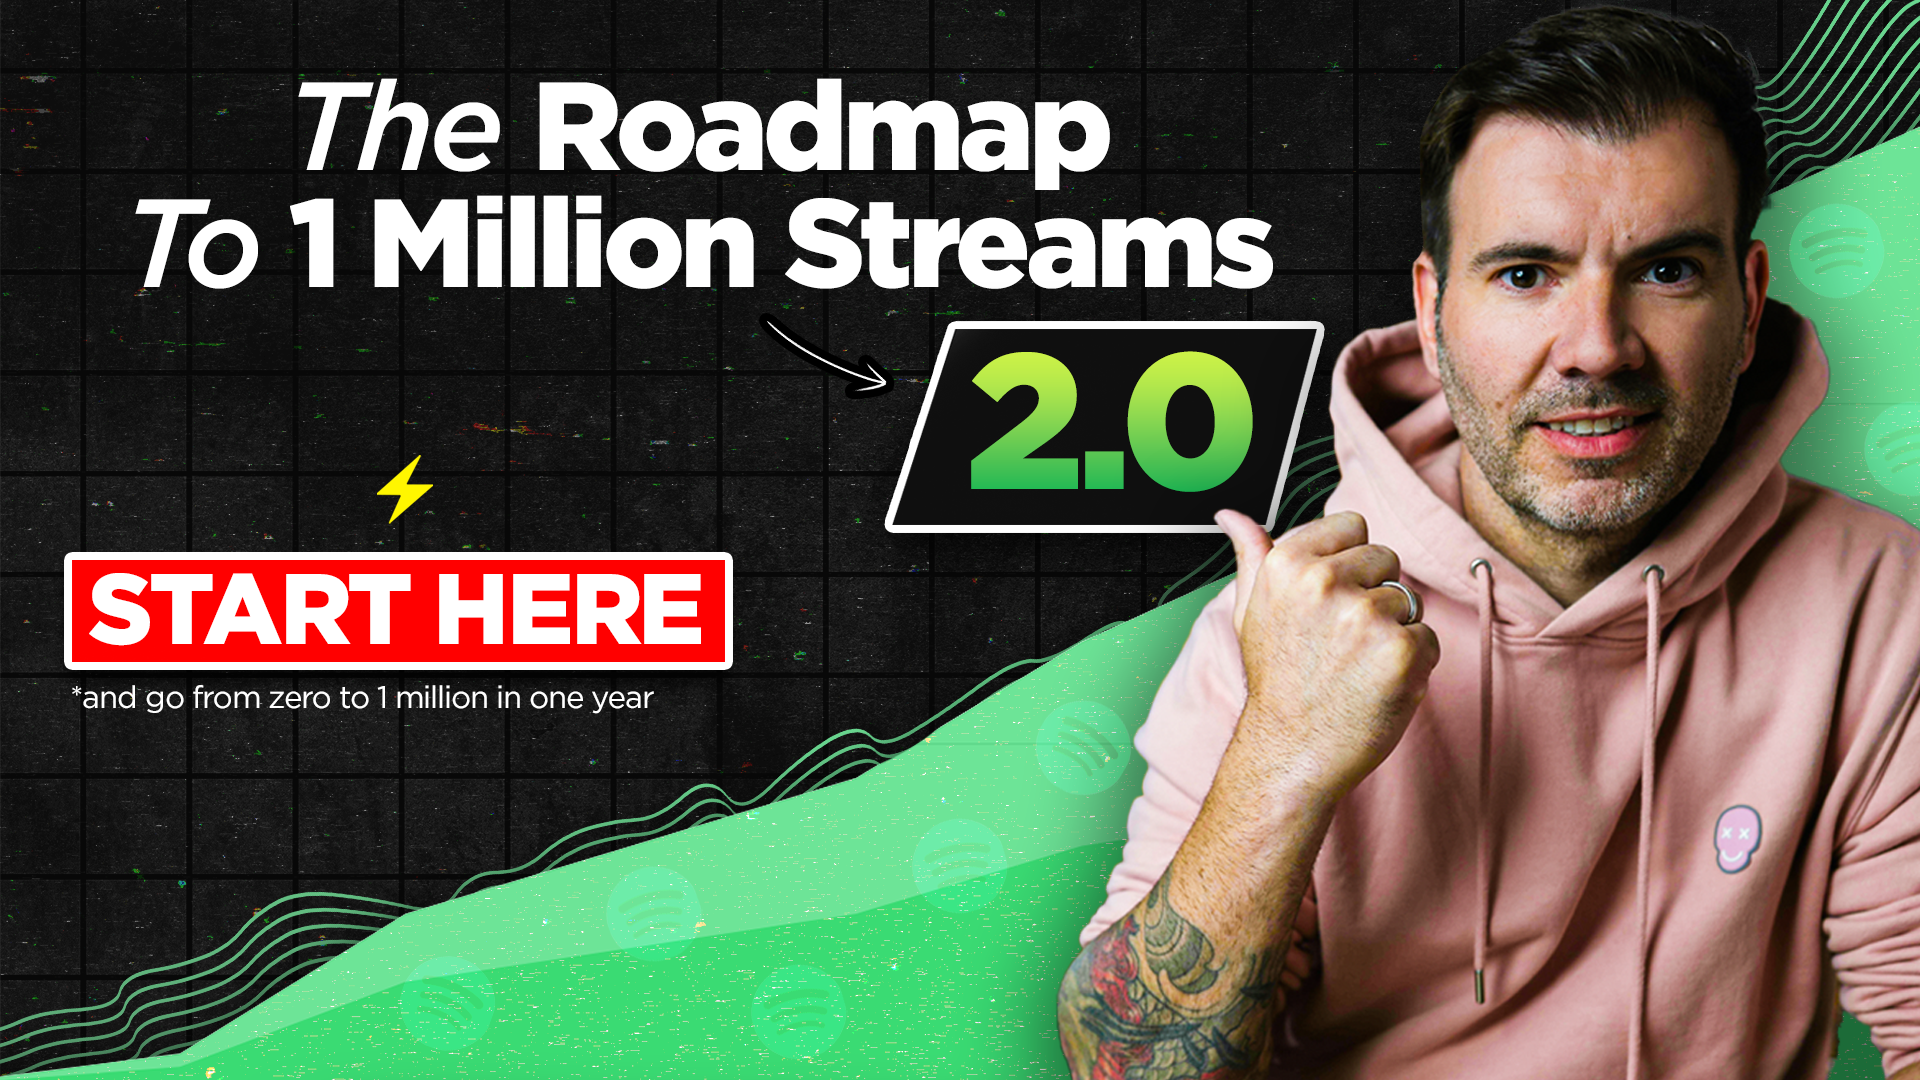 The Roadmap To 1 Million Streams 2.0